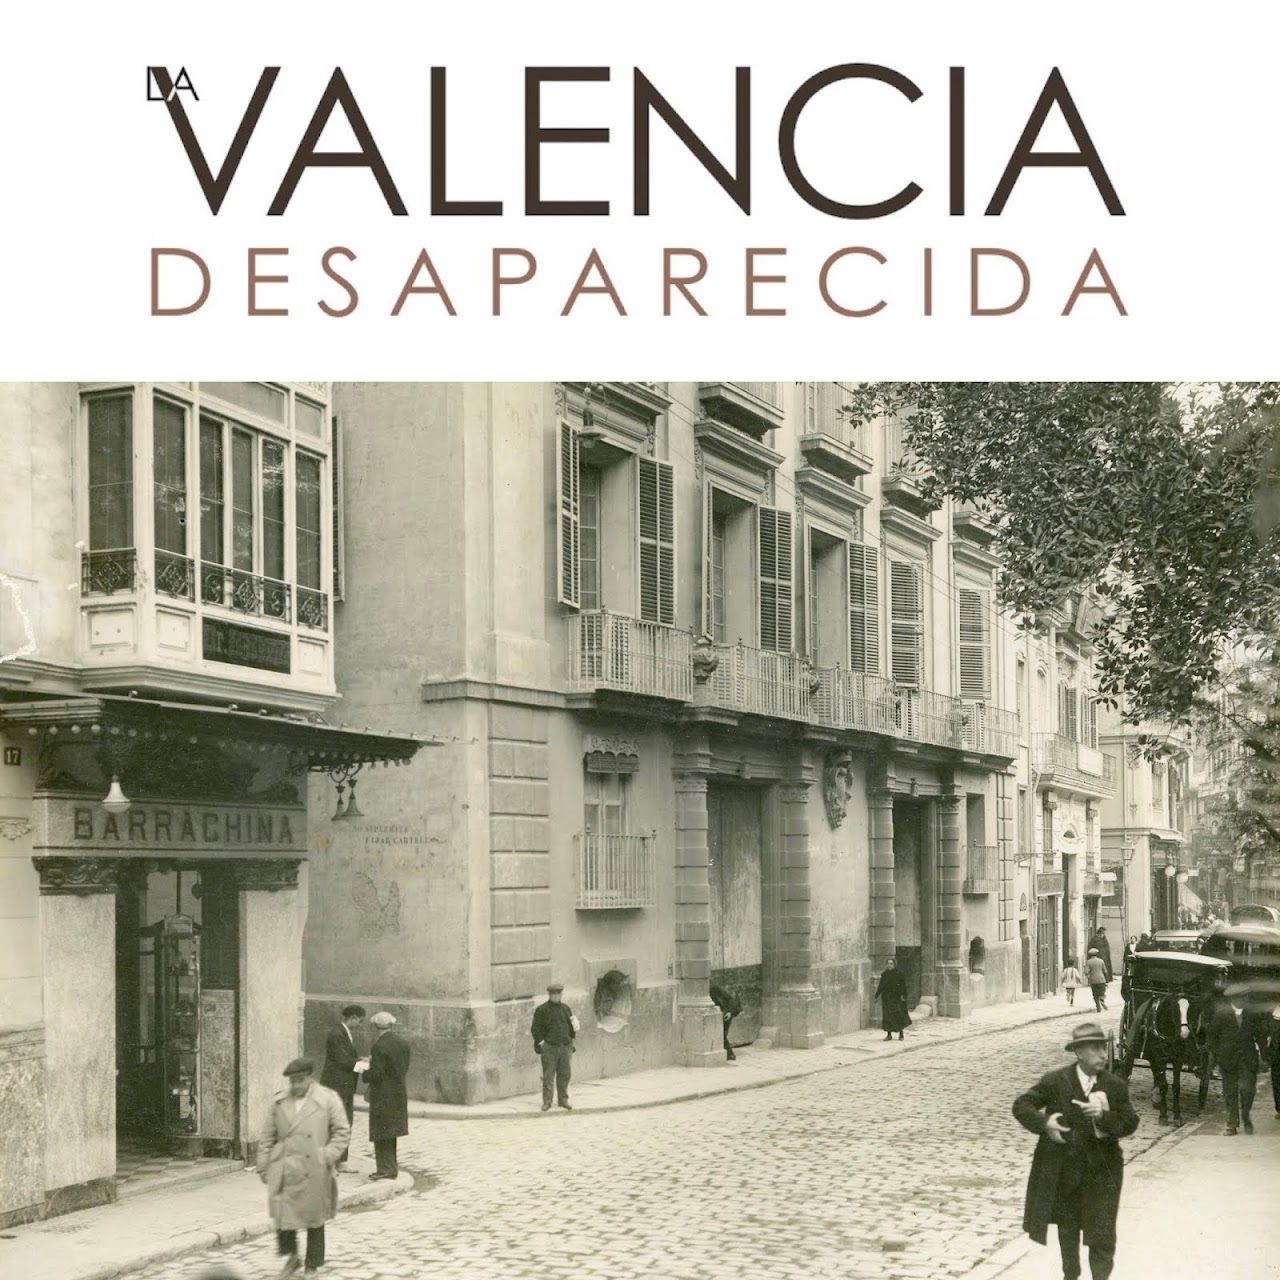 La Valencia desaparecida